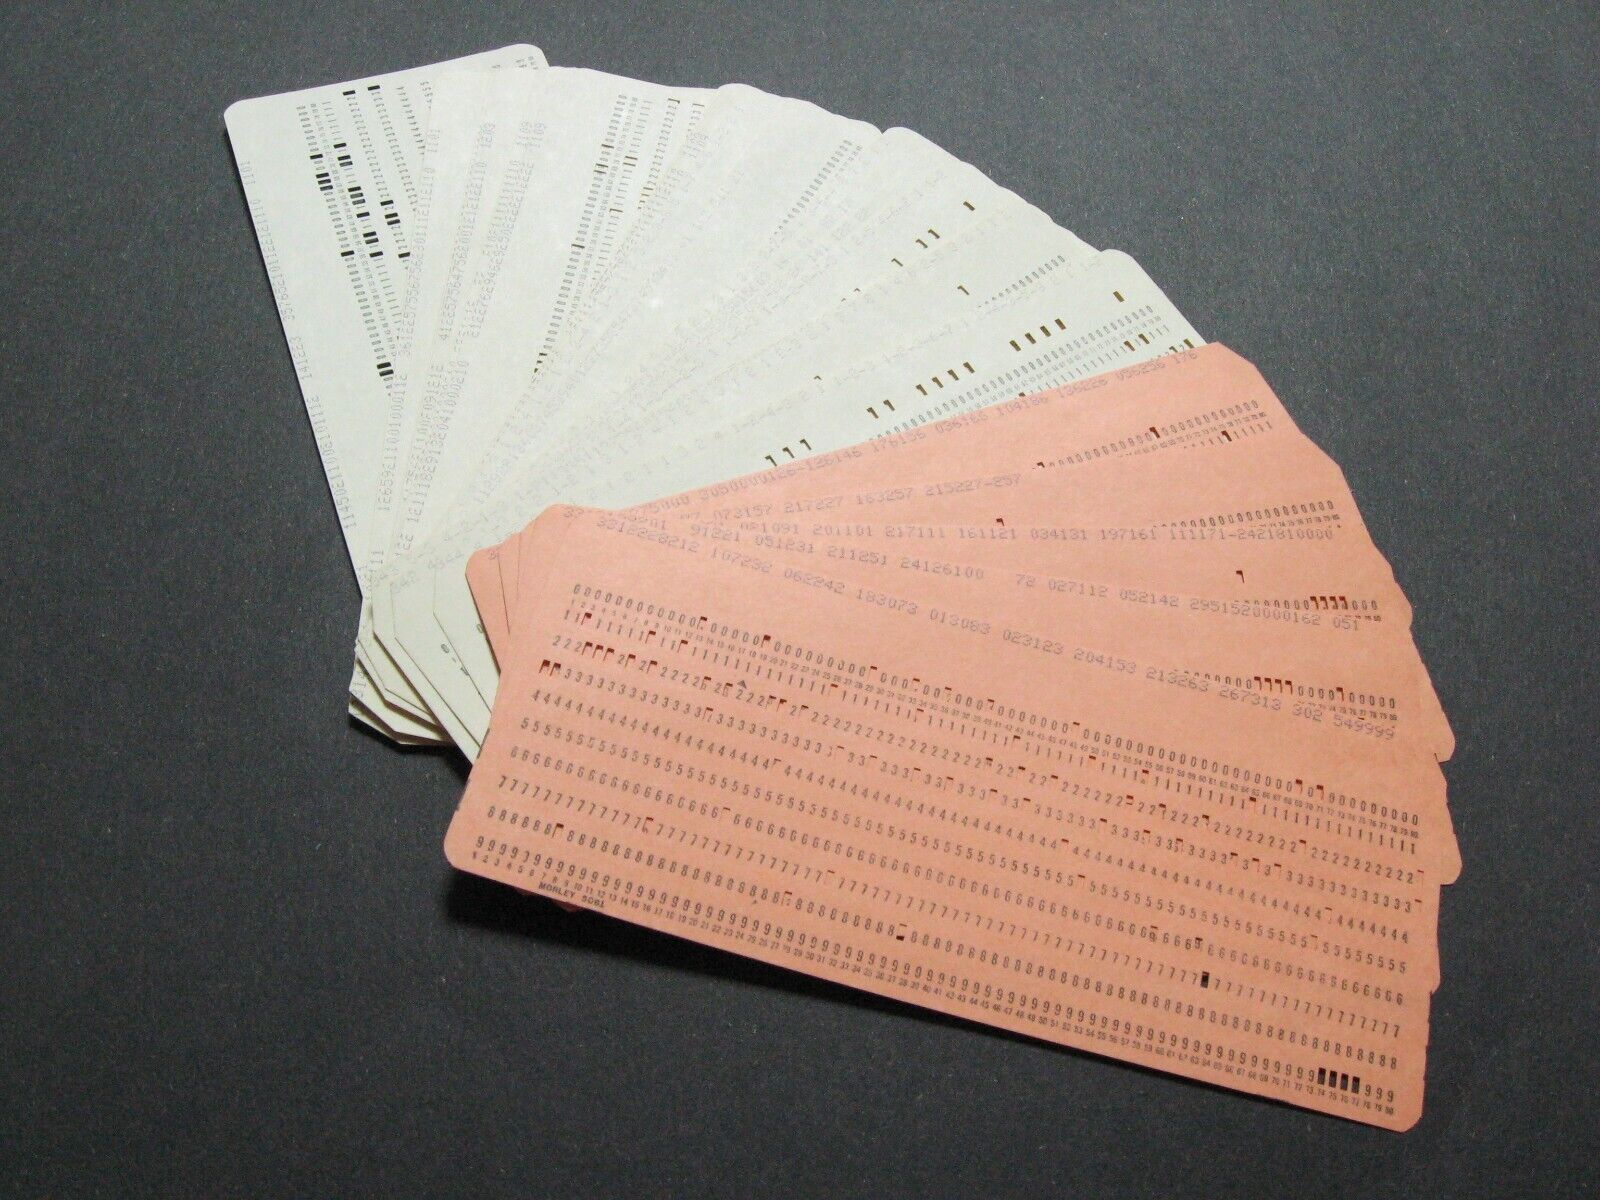 25pcs VINTAGE MAINFRAME COMPUTER PUNCH CARDS. 80-column format. circa 1970s.